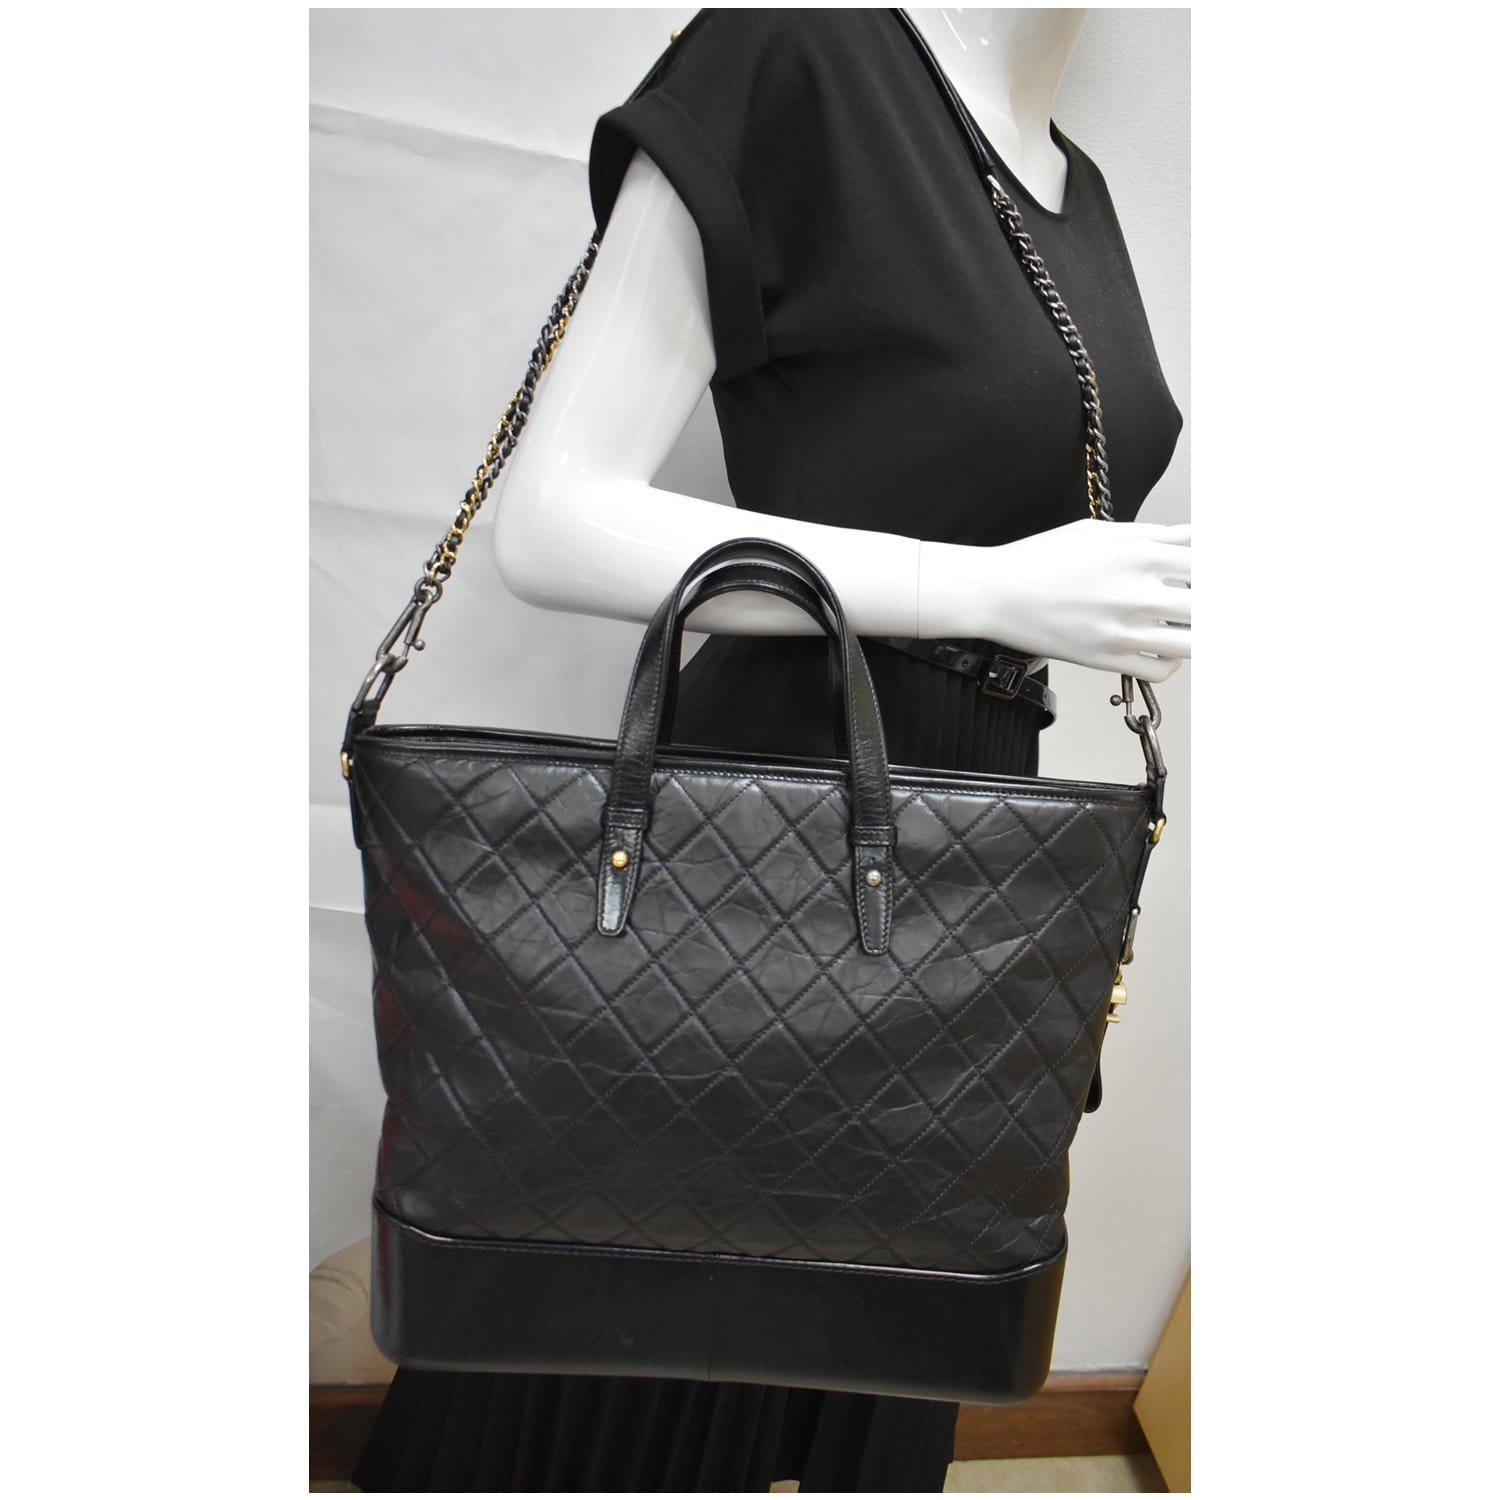 Gabrielle Chanel Fashion Manifesto black tote bag